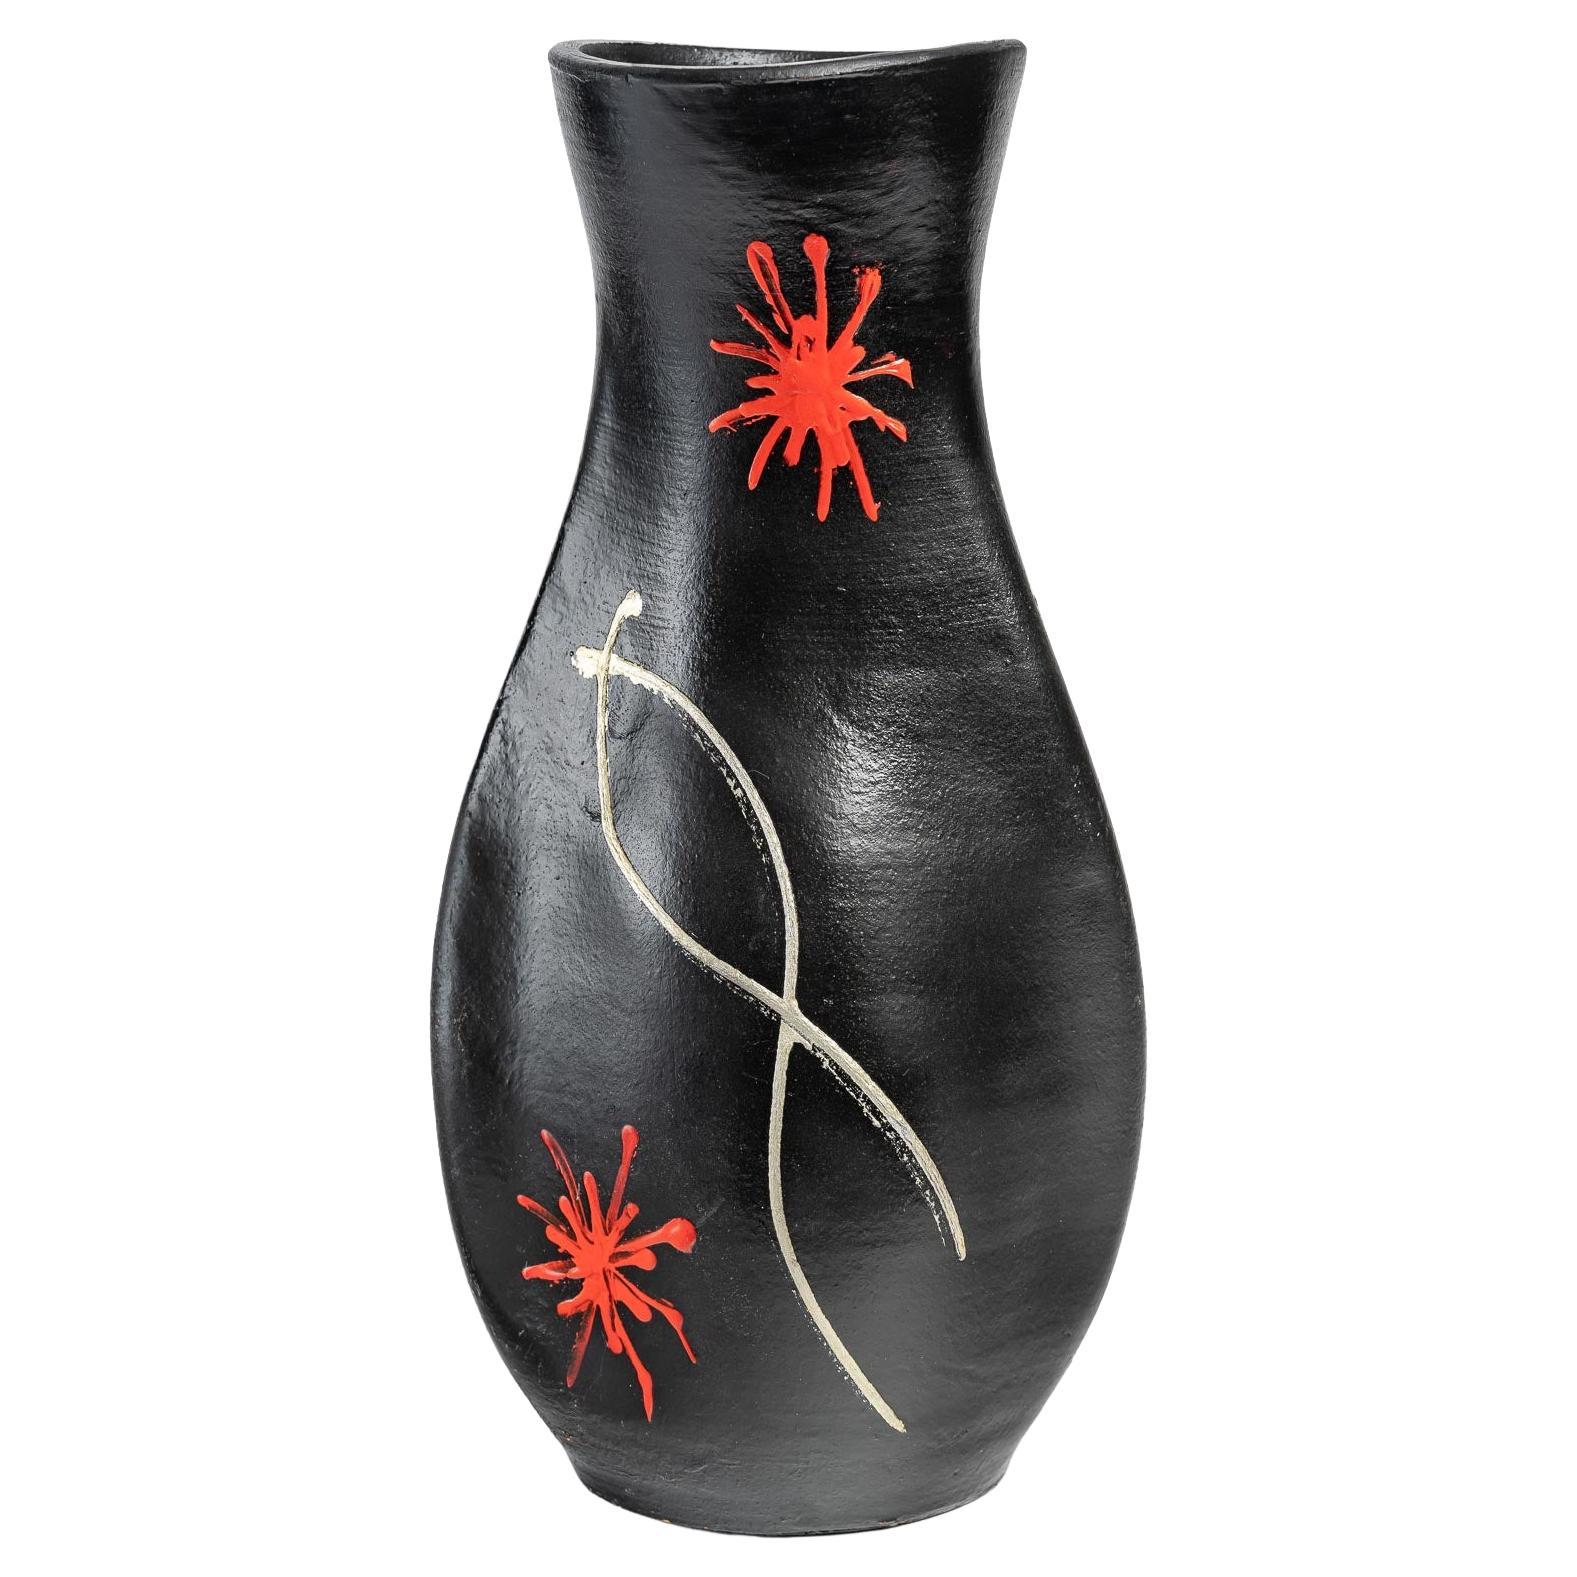 Vase en terre cuite peinte, design 1950-1960